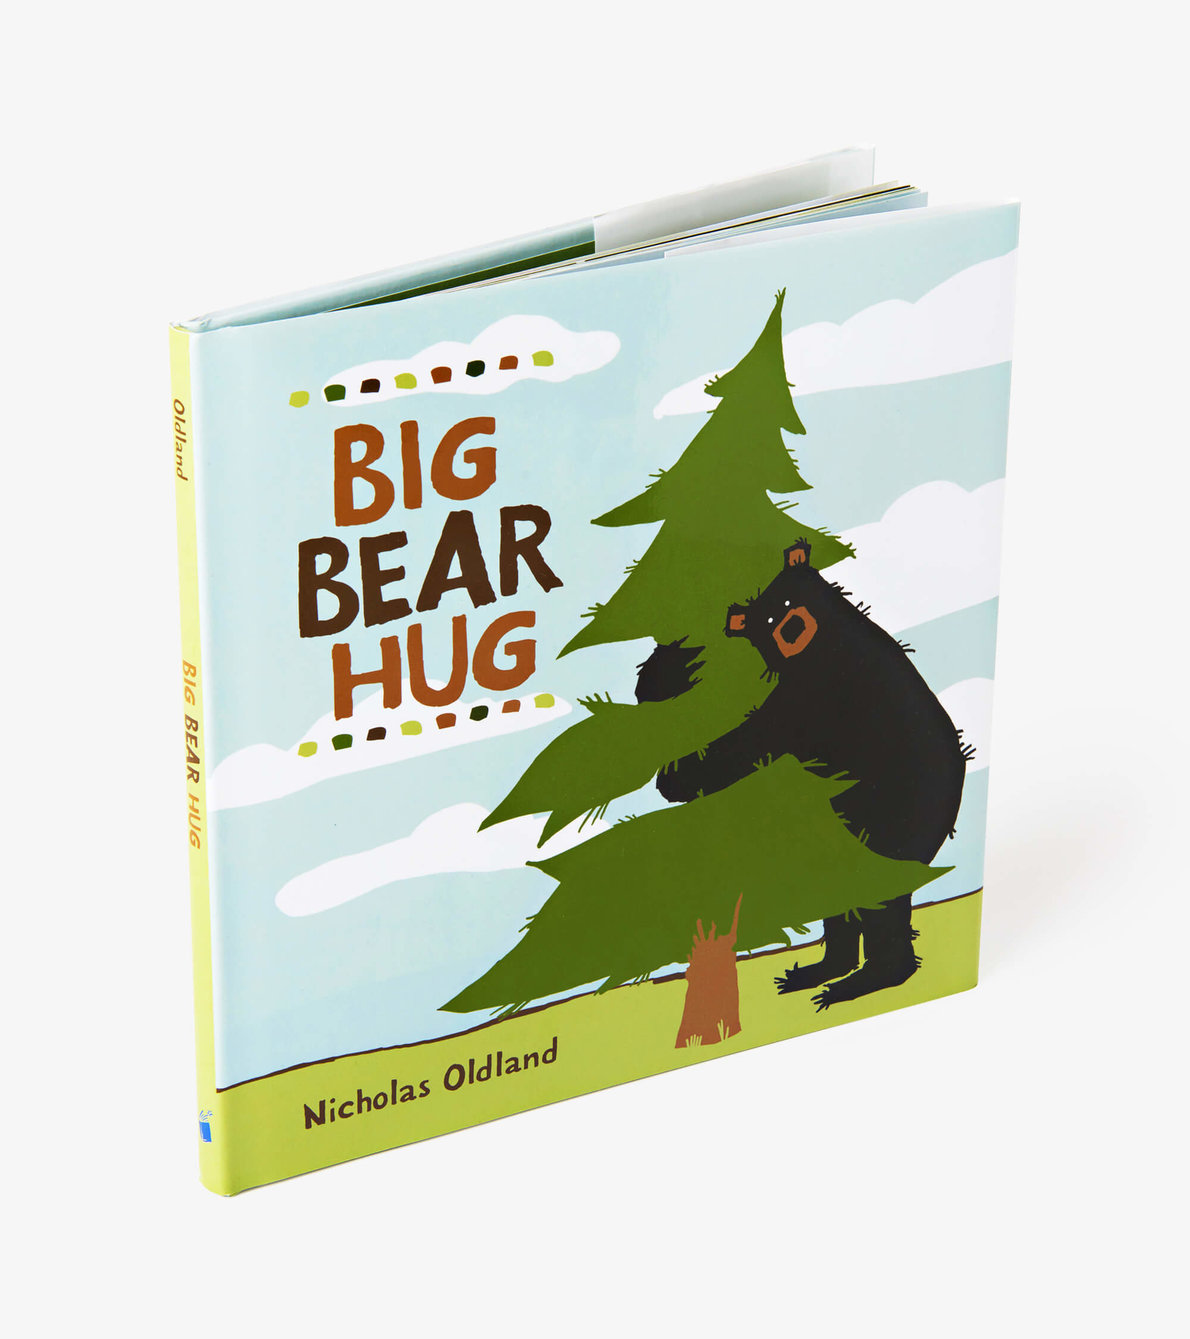 View larger image of "Big Bear Hug" Children's Book